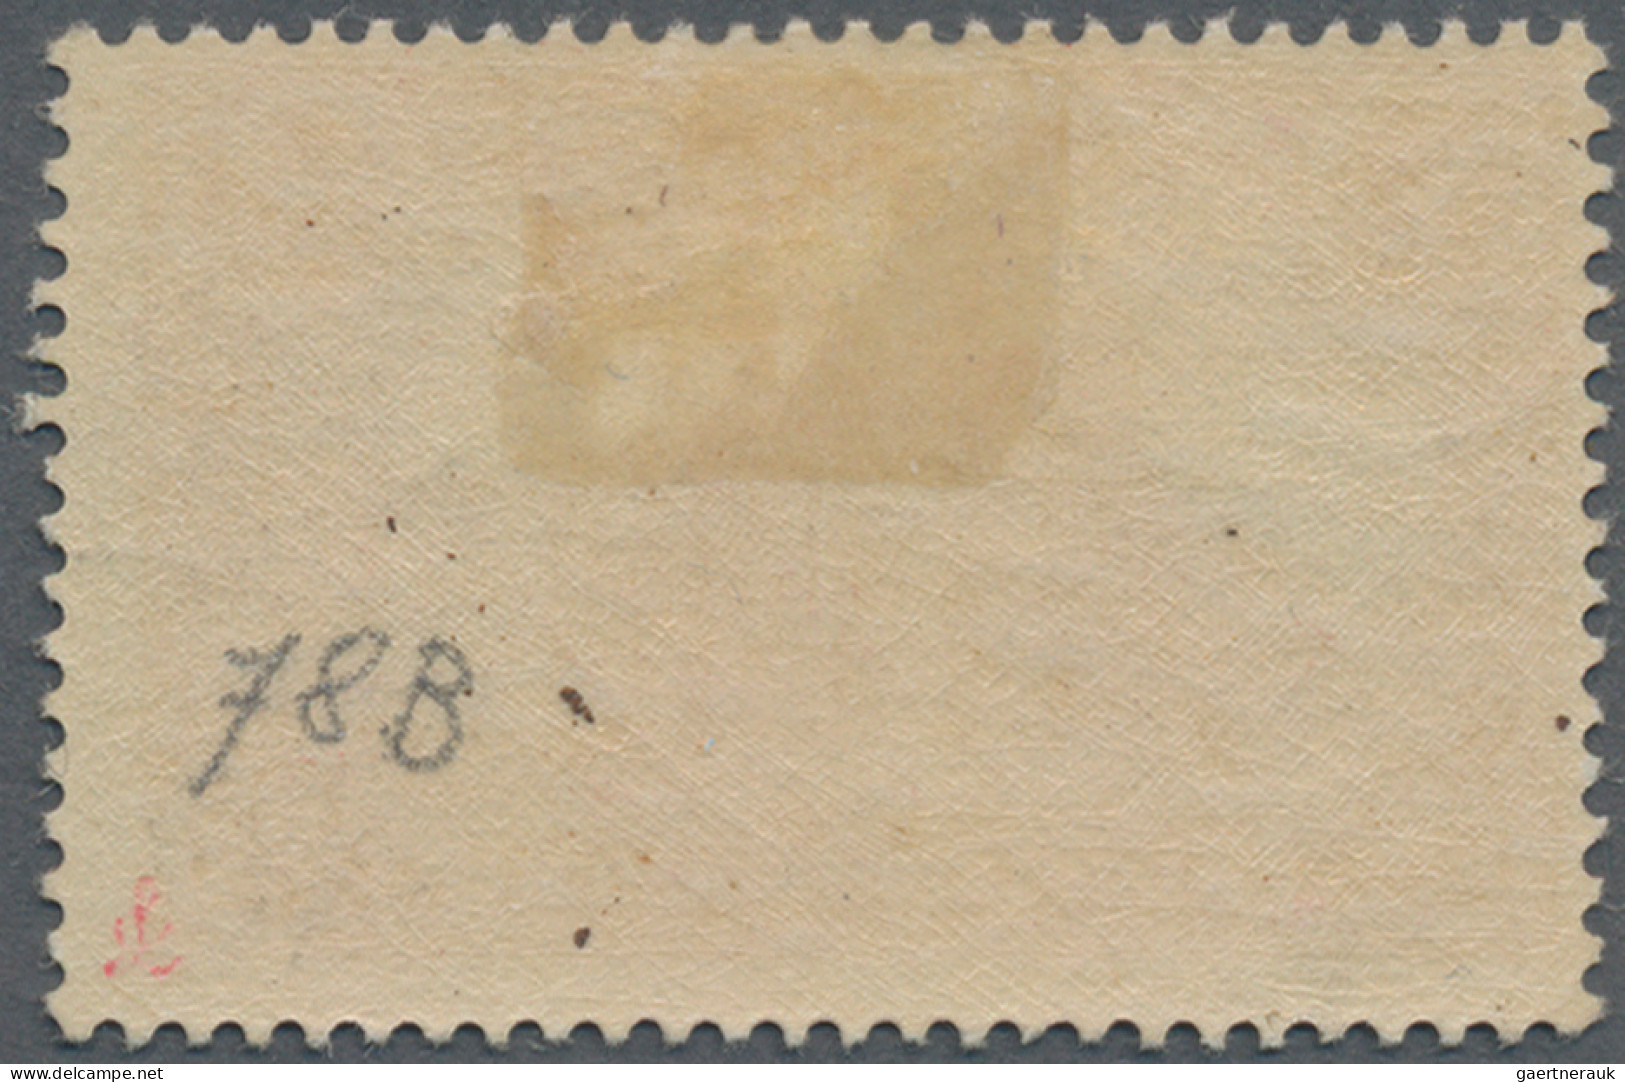 Deutsches Reich - Germania: 1902, Germania, 1 M. Karminrot, Gez. 25:16, Ungebrau - Unused Stamps